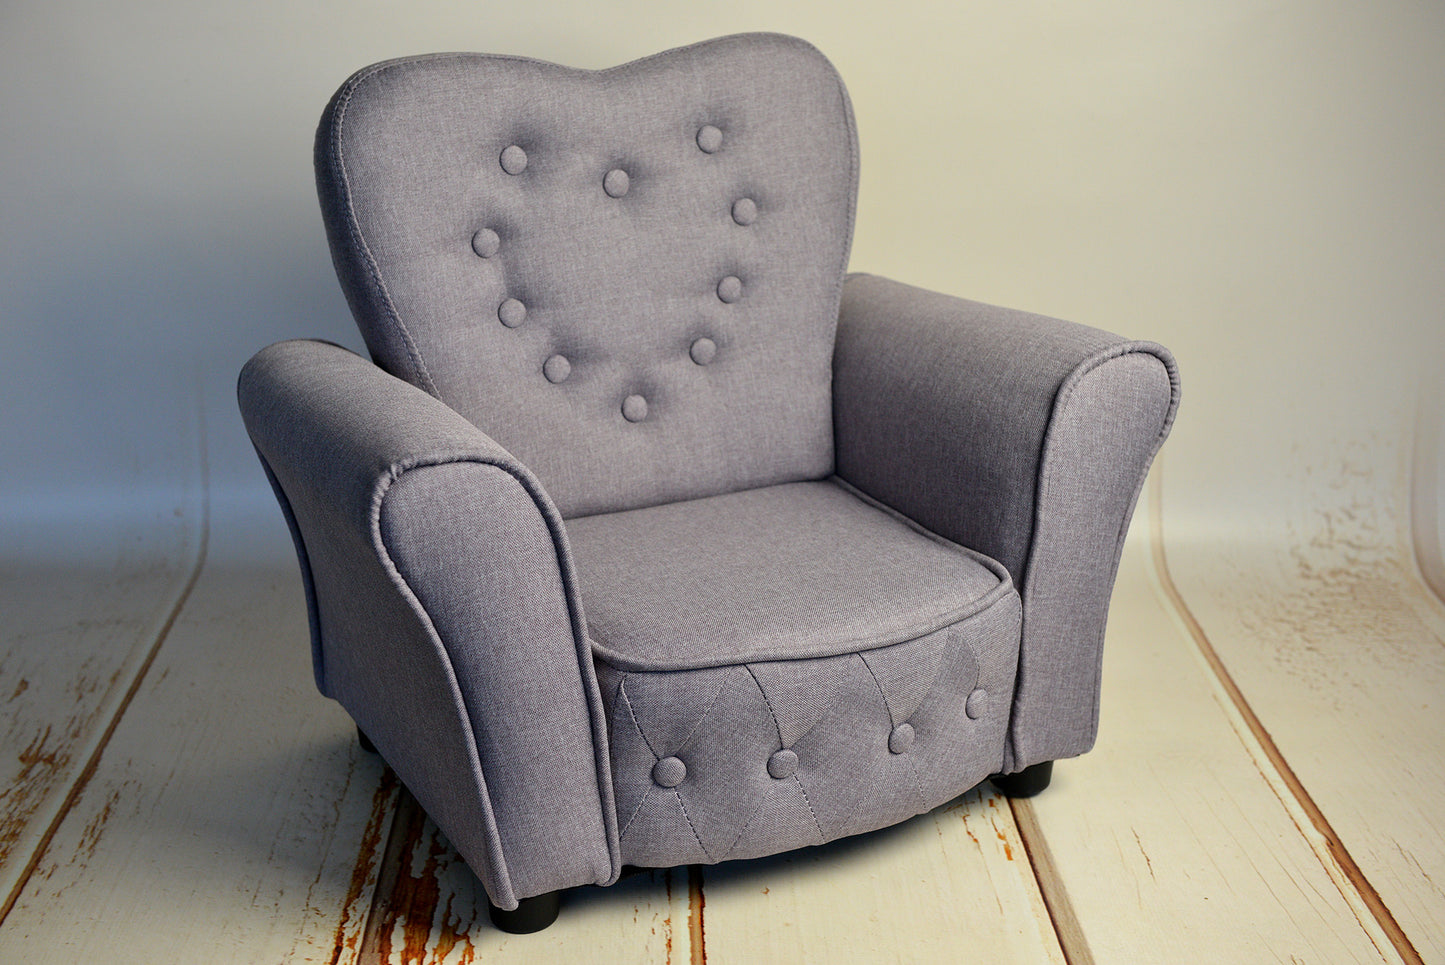 Sofa for newborn photography prop